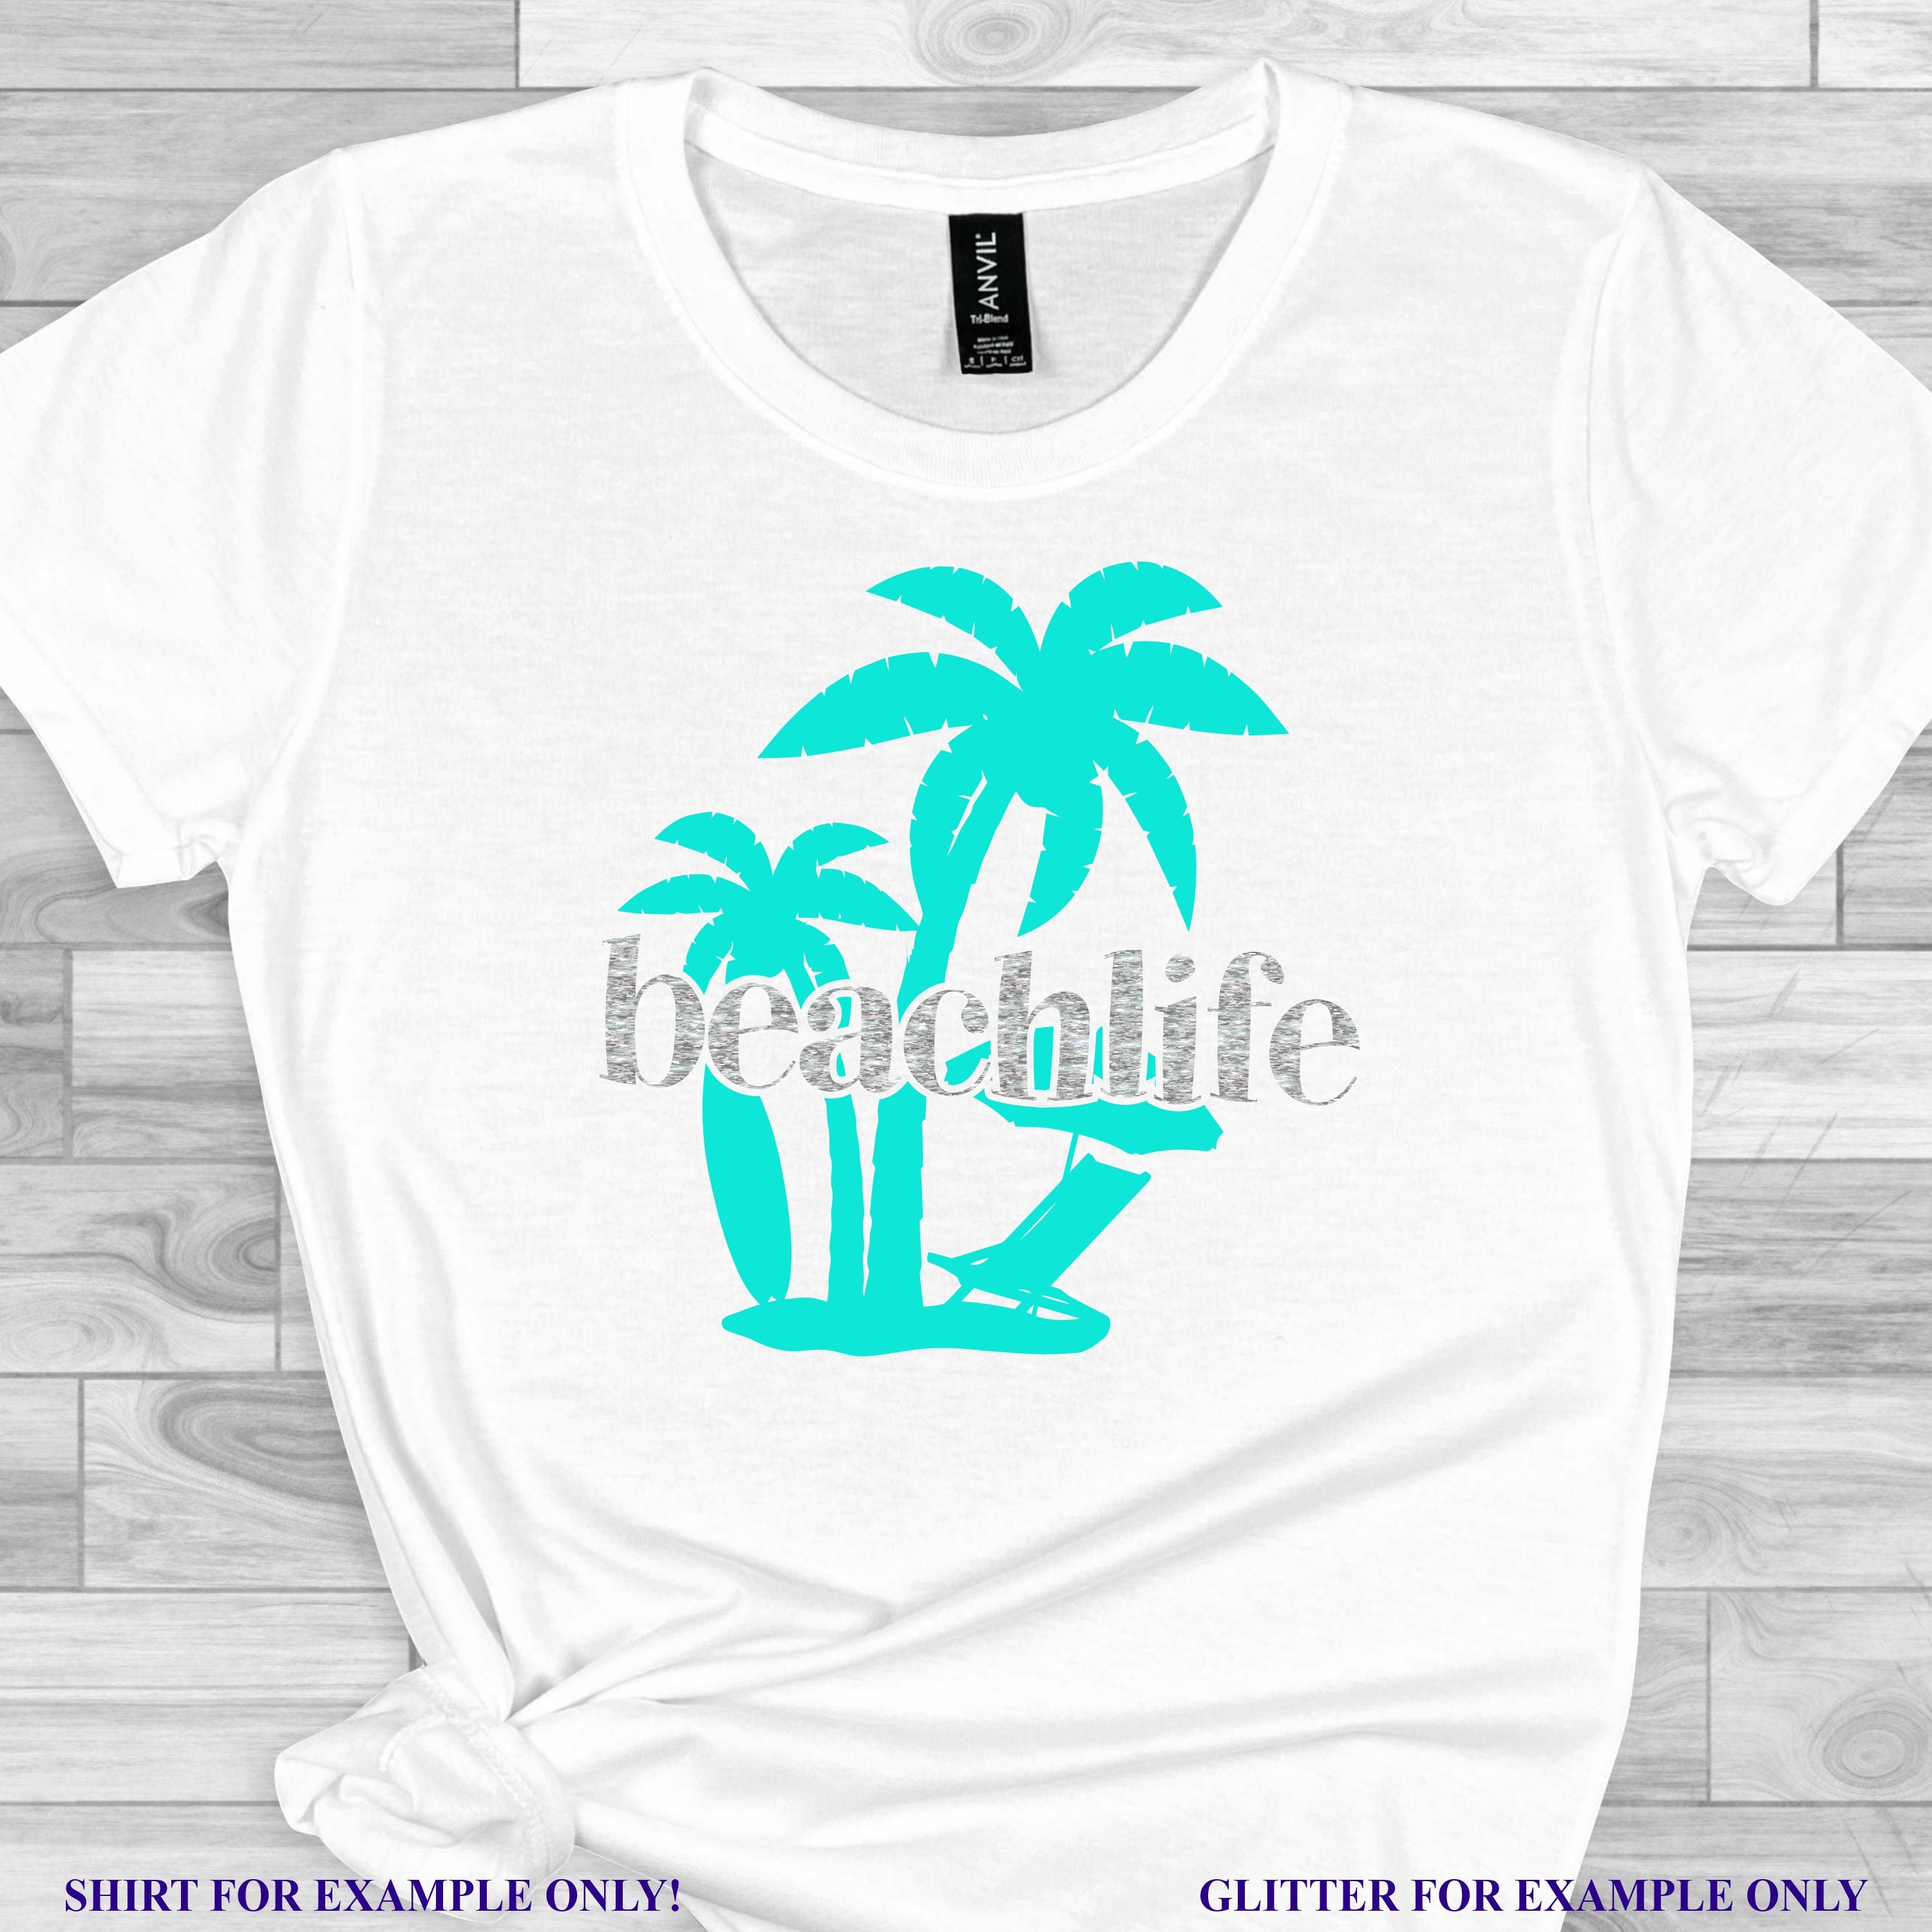 Download Summer Svg Cricut Beach Please Svg Beach Svg Cutting File Beach Printable Summer Shirt Design Dxf Clip Art Vacation Svg Silhouette Collage Craft Supplies Tools